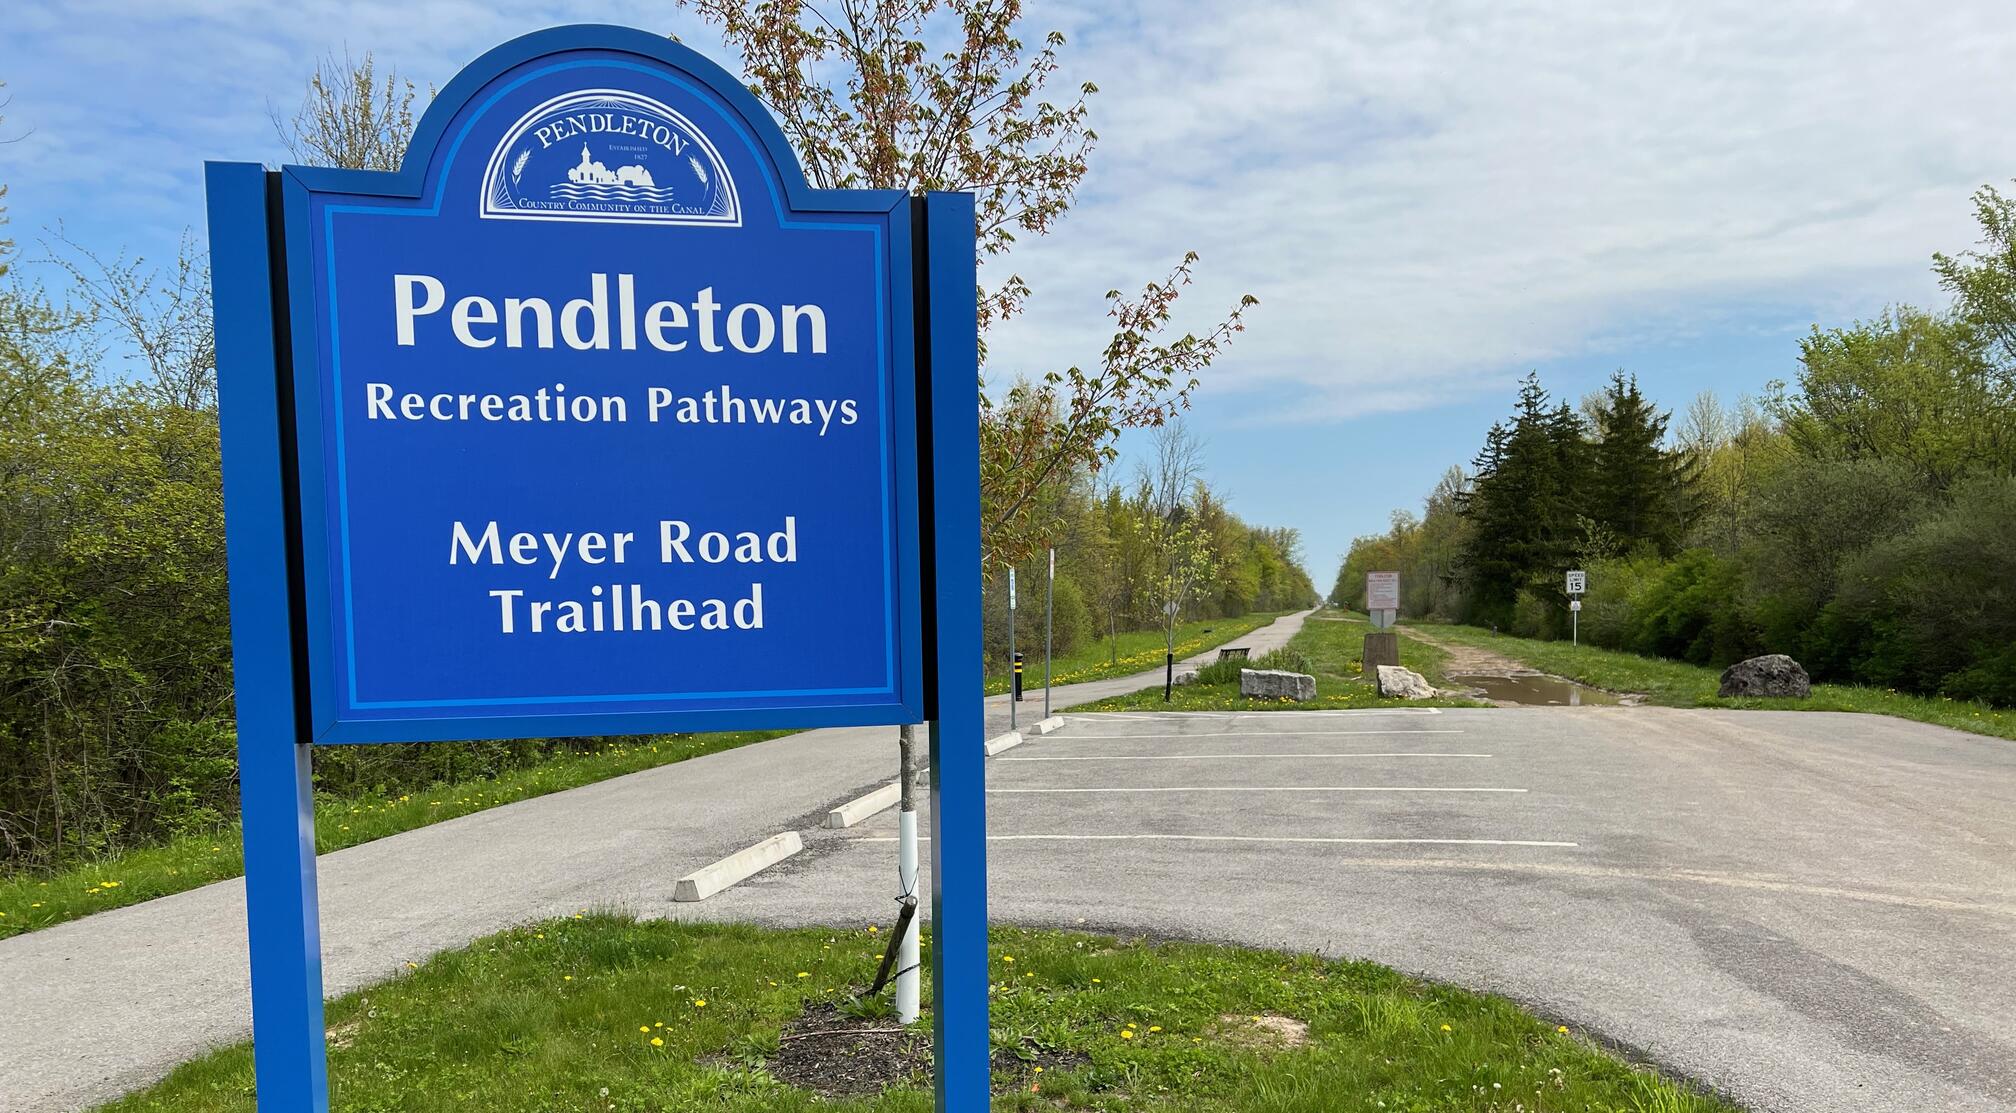 meyer road trailhead sign